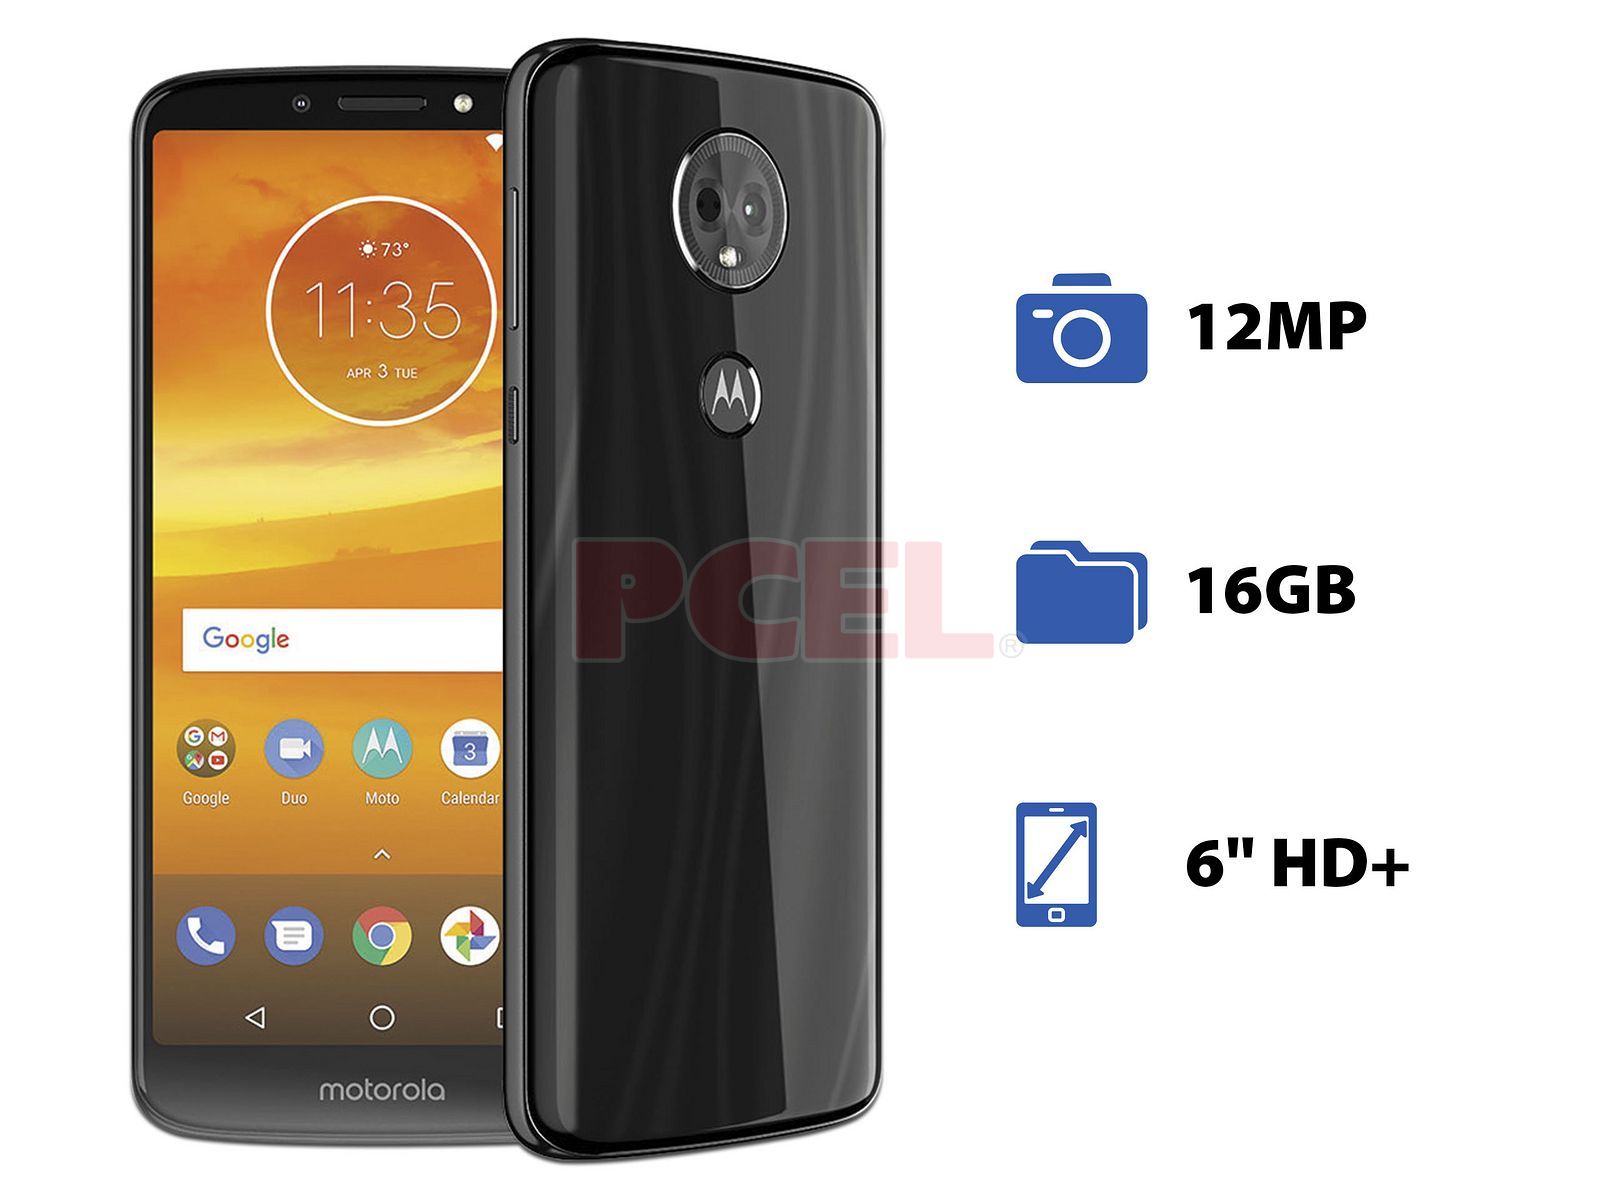 Smartphone Motorola Moto E5 Plus: Procesador Snapdragon 425 Quad Core (1.40 GHz), RAM de 2GB, Almacenamiento de 16GB (Expandible), Pantalla de 6" HD+, Bluetooth 4.0, Wi-Fi, 4G, Nano SIM, Cámara principal